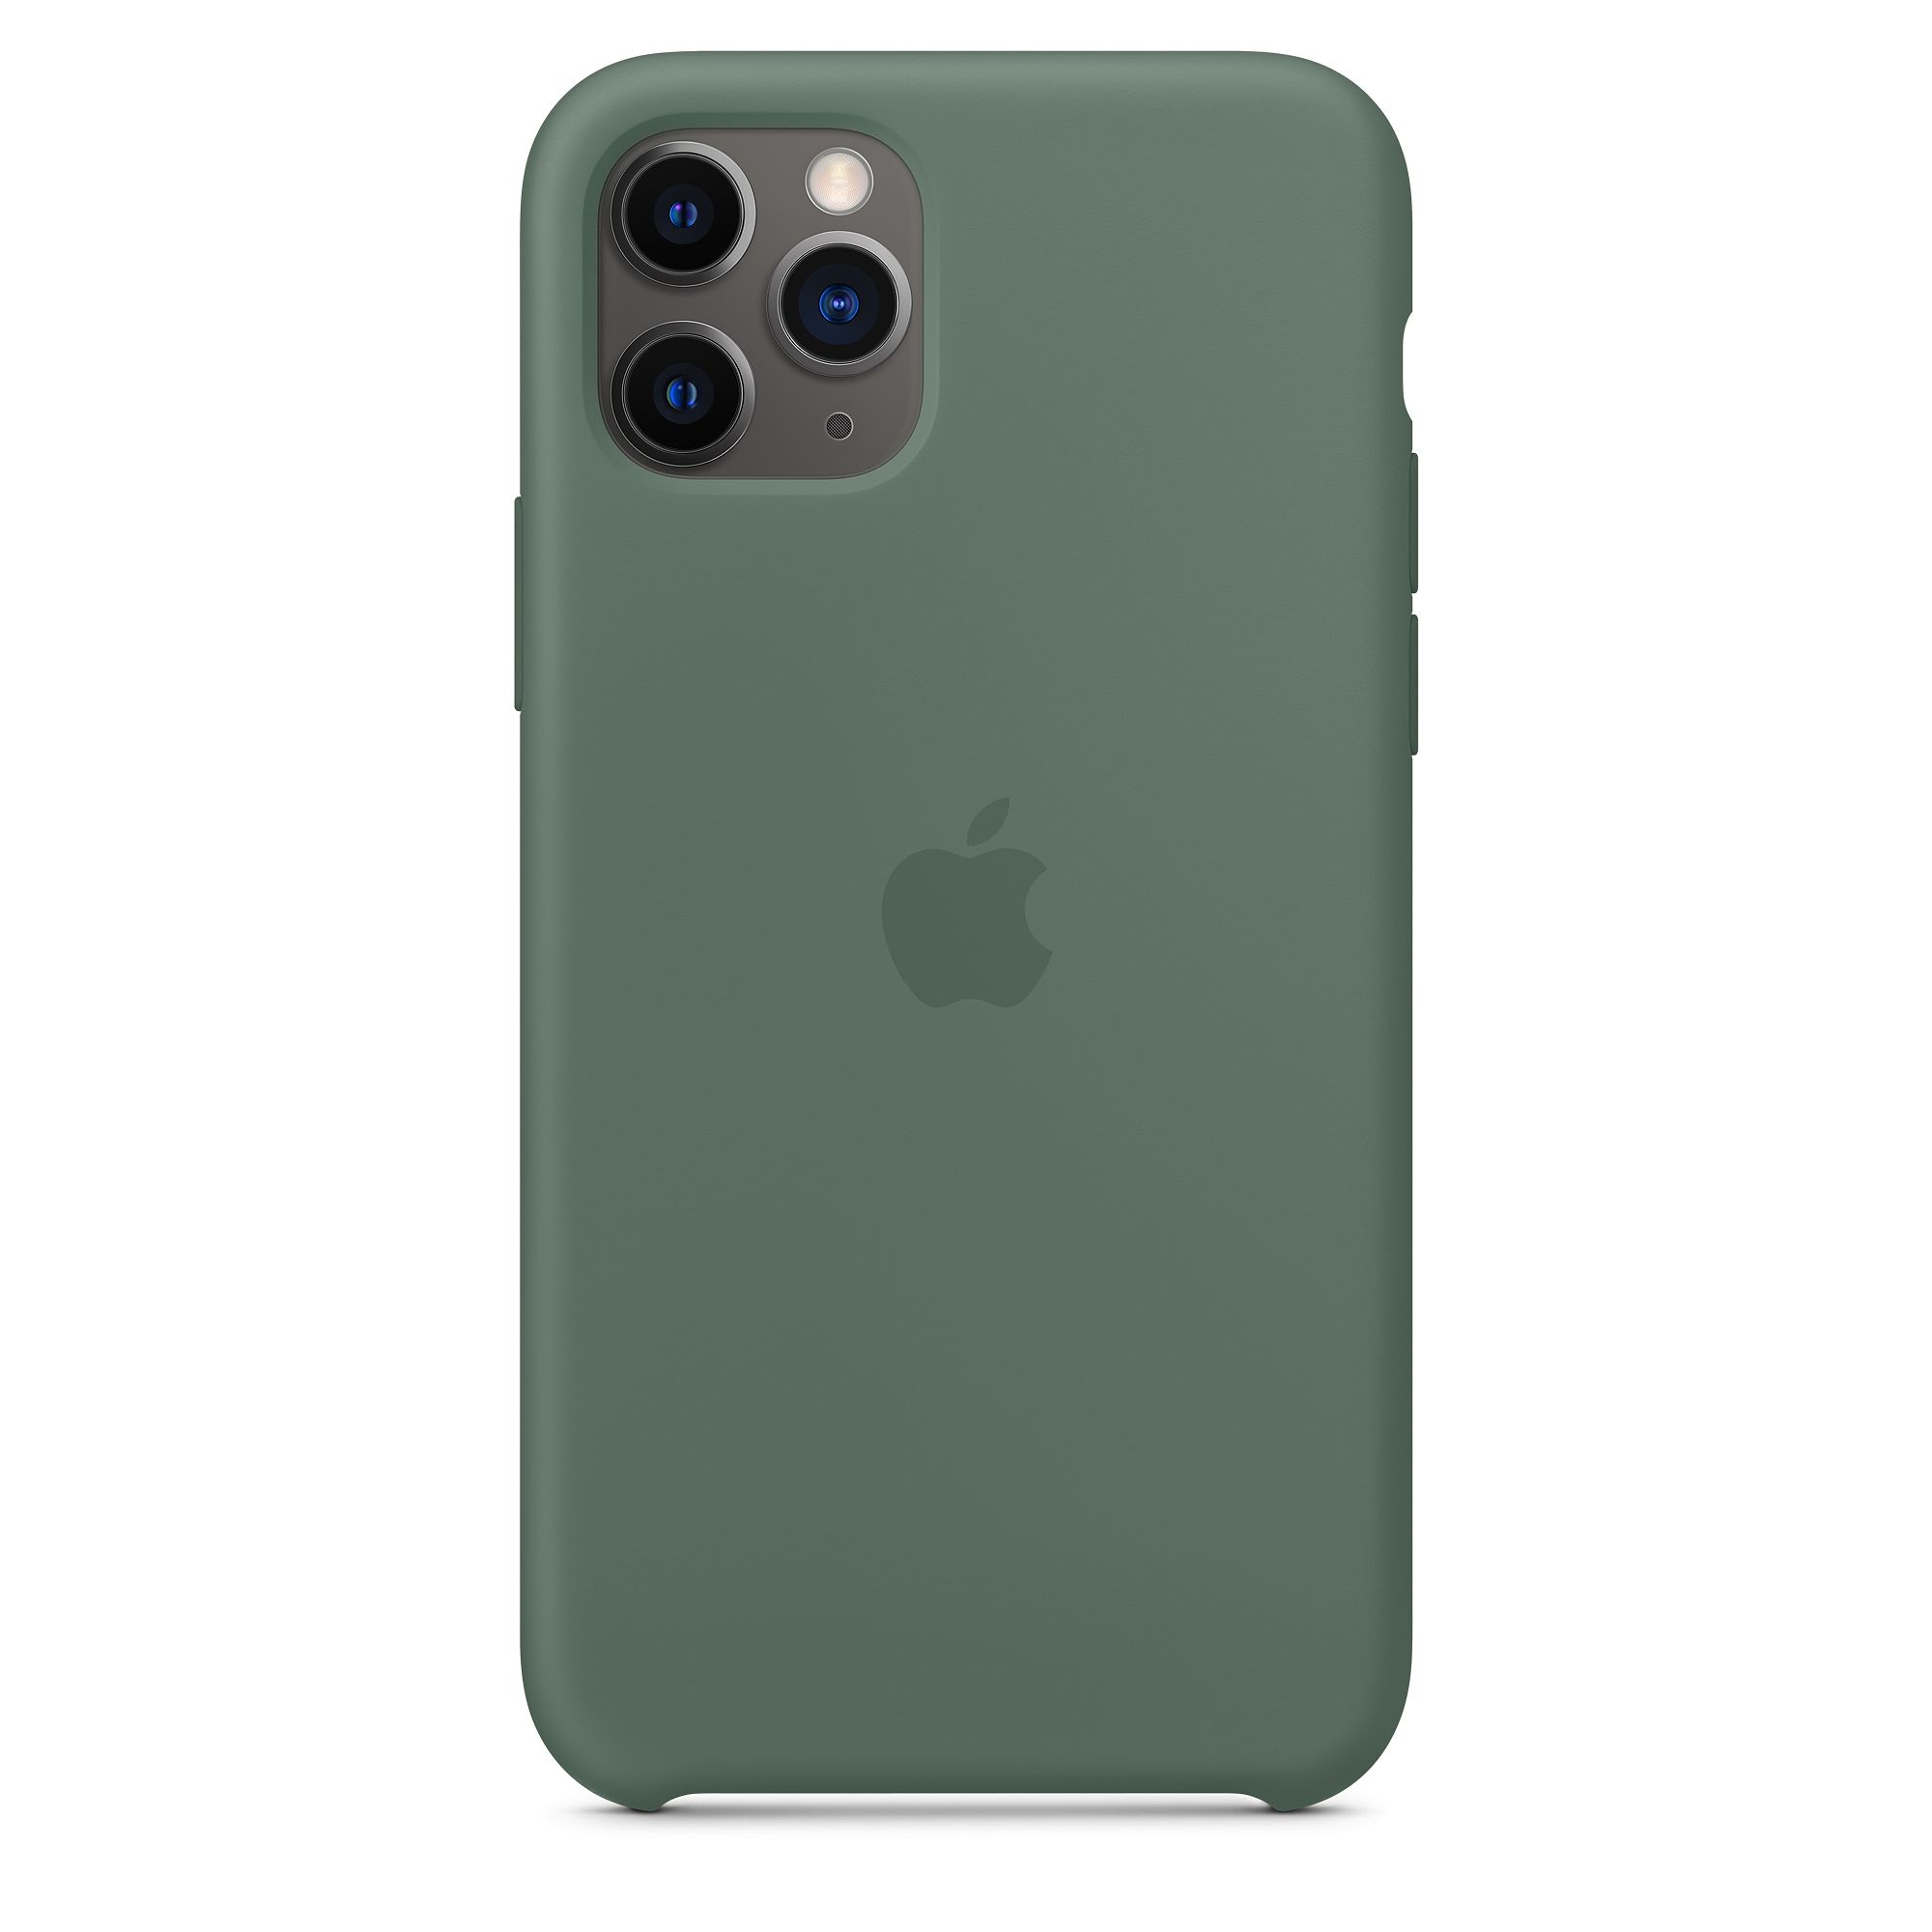 Silicon Case Original for iPhone 11 Pro (Сосновый зеленый)